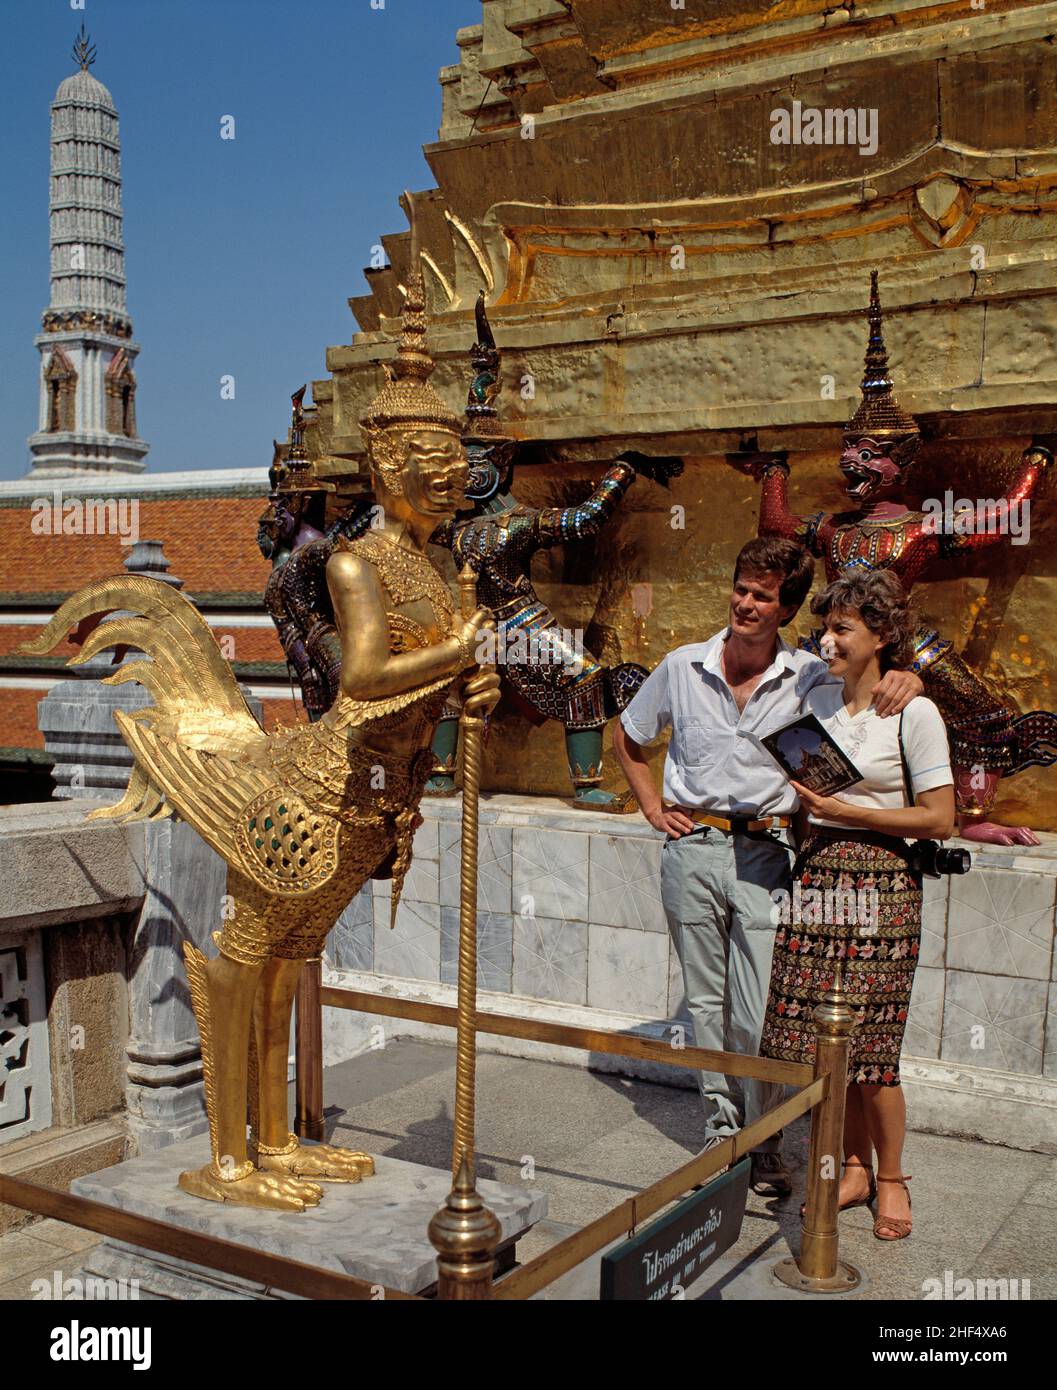 Thailand. Bangkok. Tourist couple admiring golden statue at the Grand Palace. Stock Photo